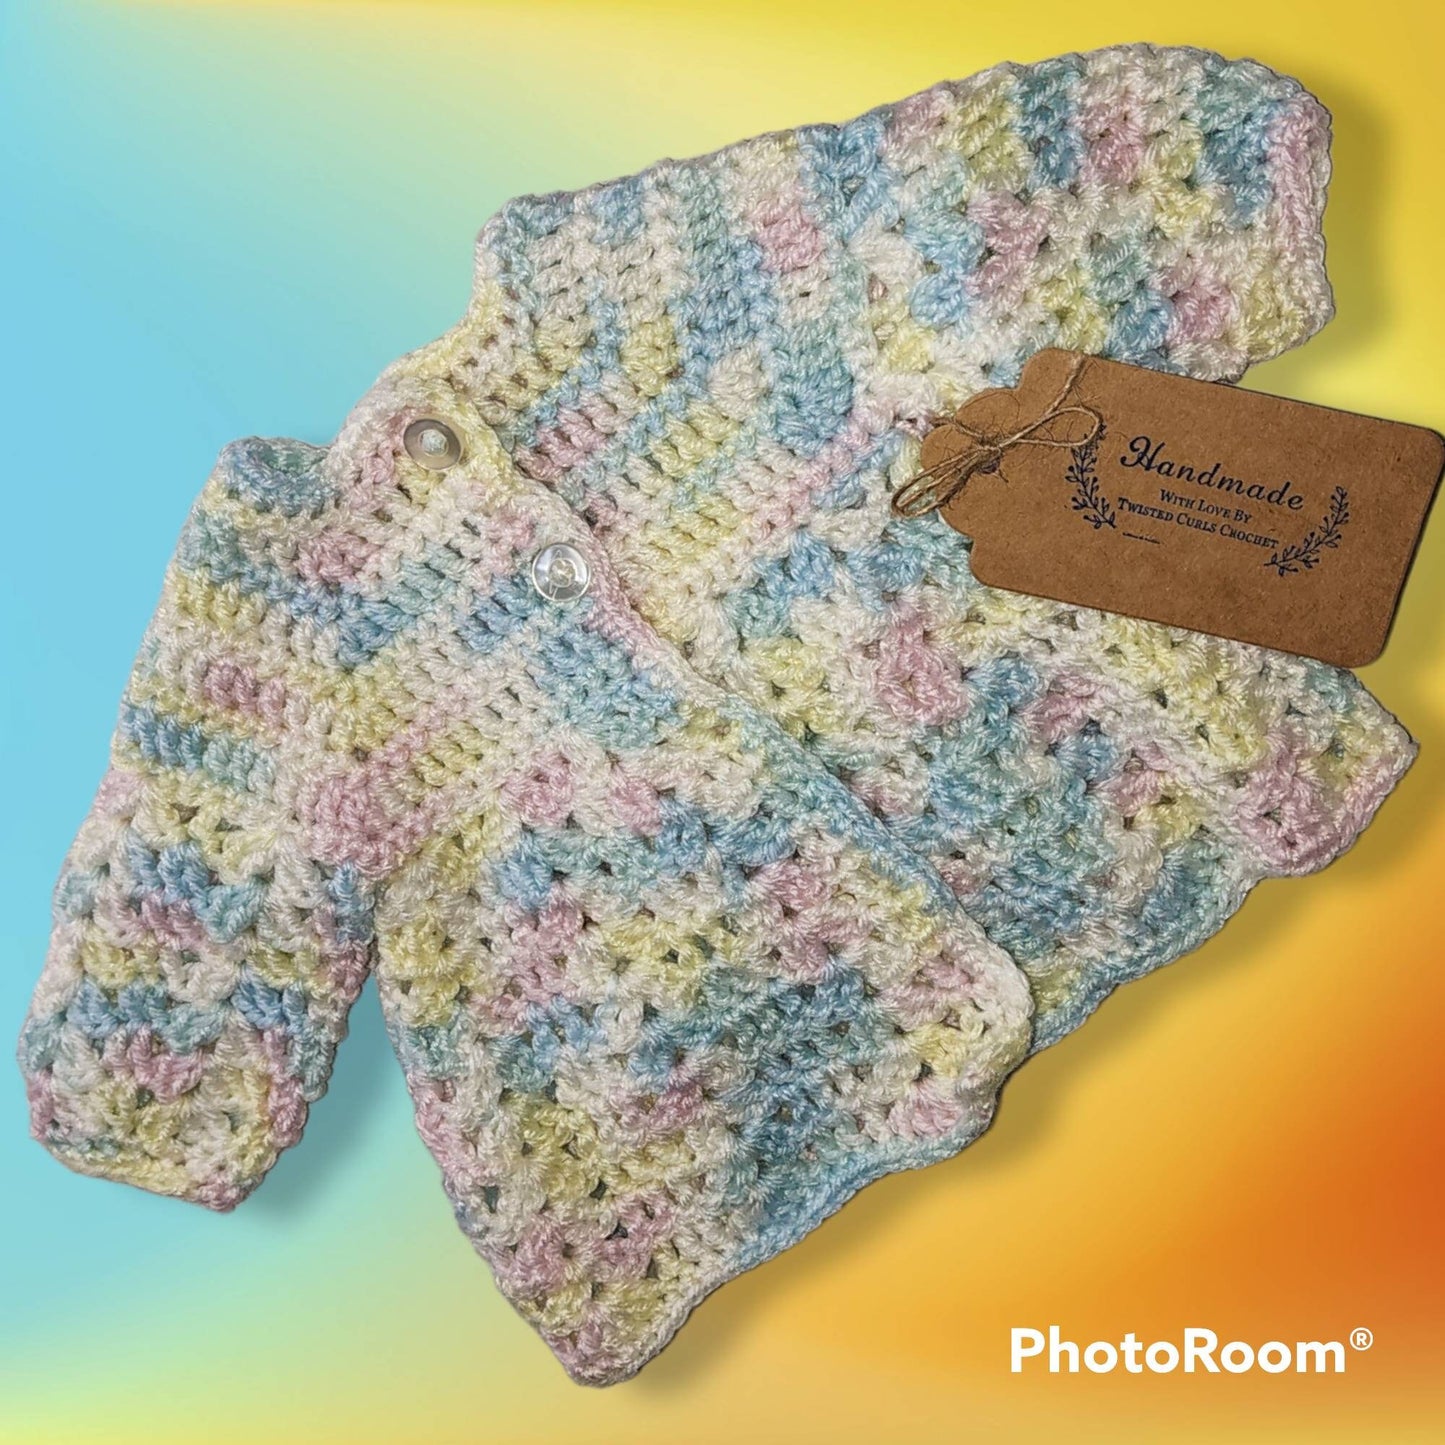 Handmade Crocheted newborn girl baby outfit set